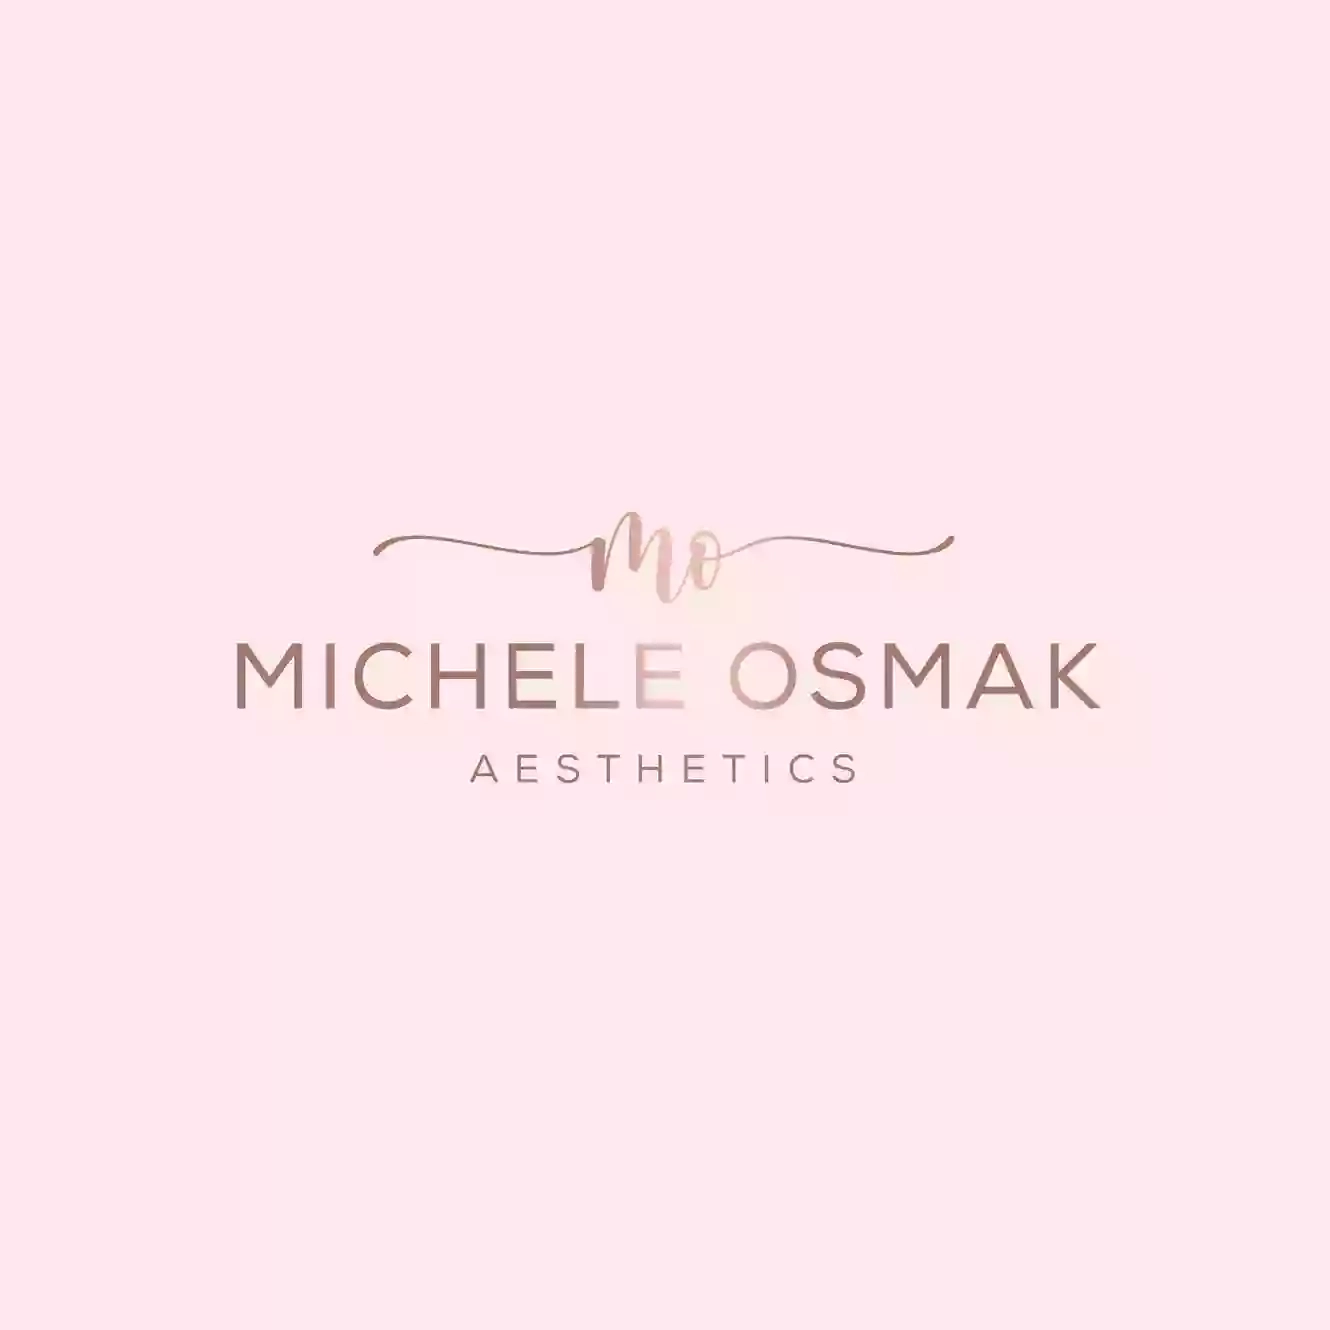 Michele Osmak Aesthetics